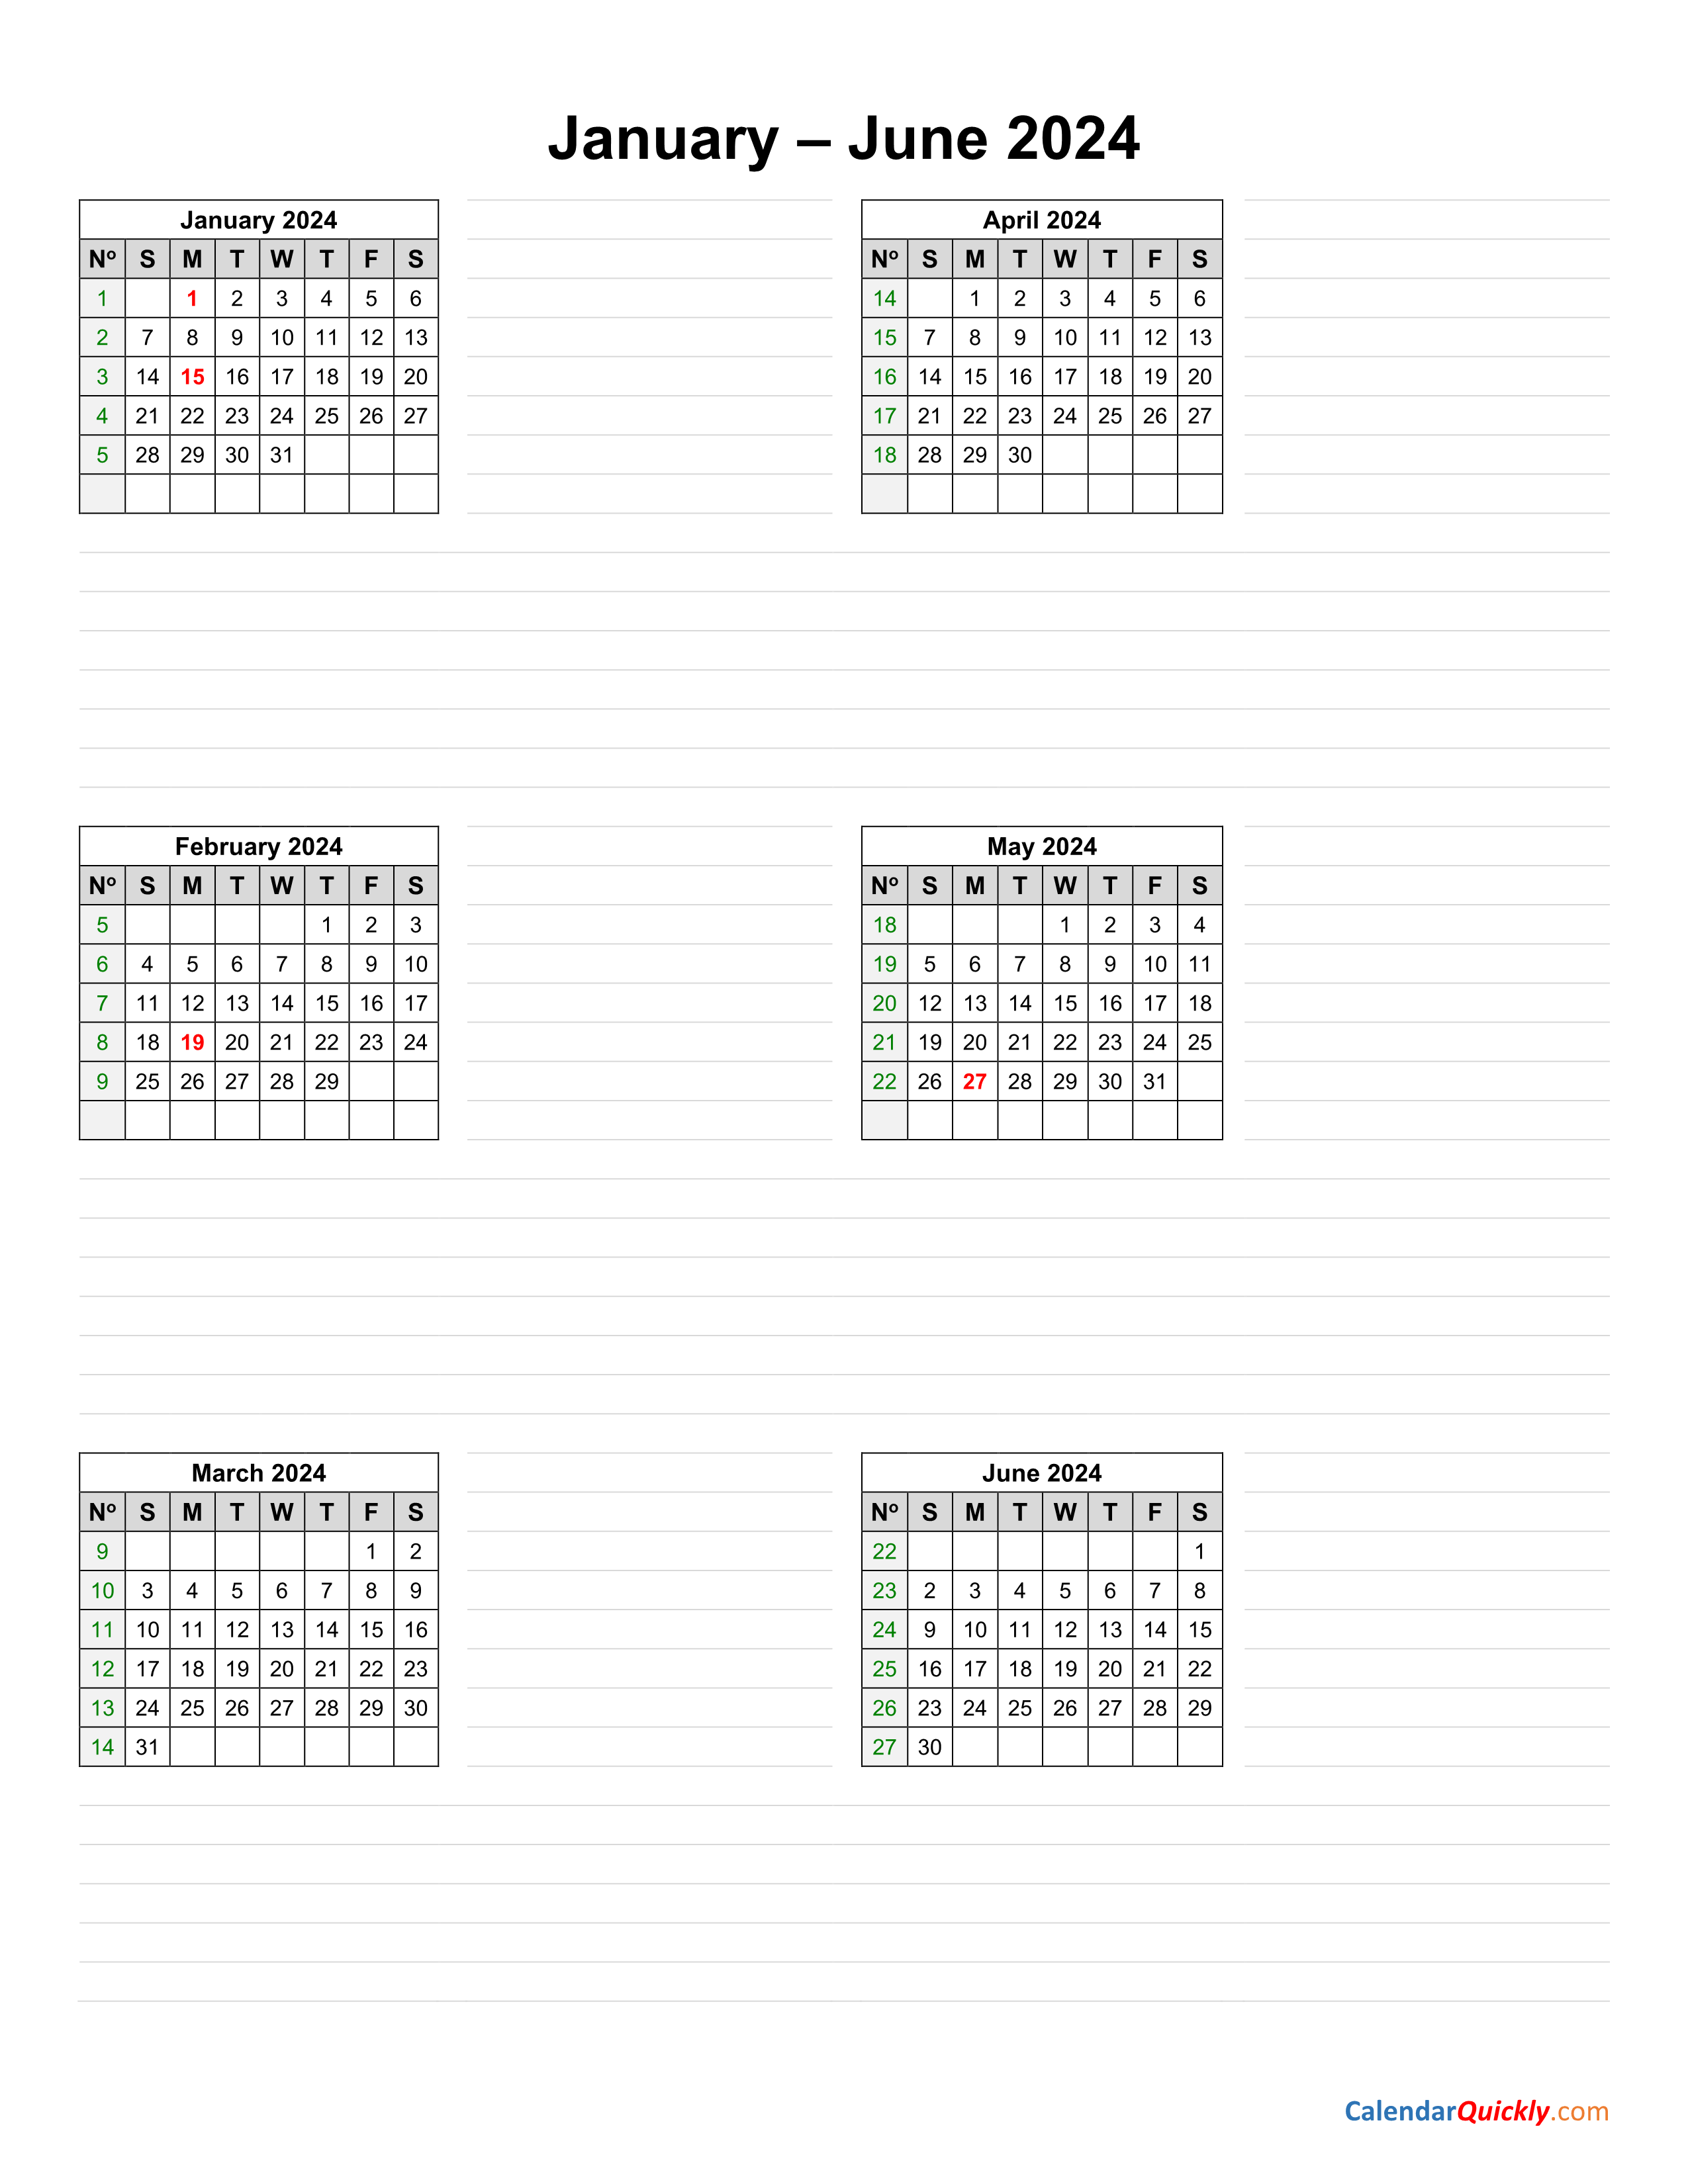 January To June 2024 Calendar Vertical | Calendar Quickly throughout January - June 2024 Calendar